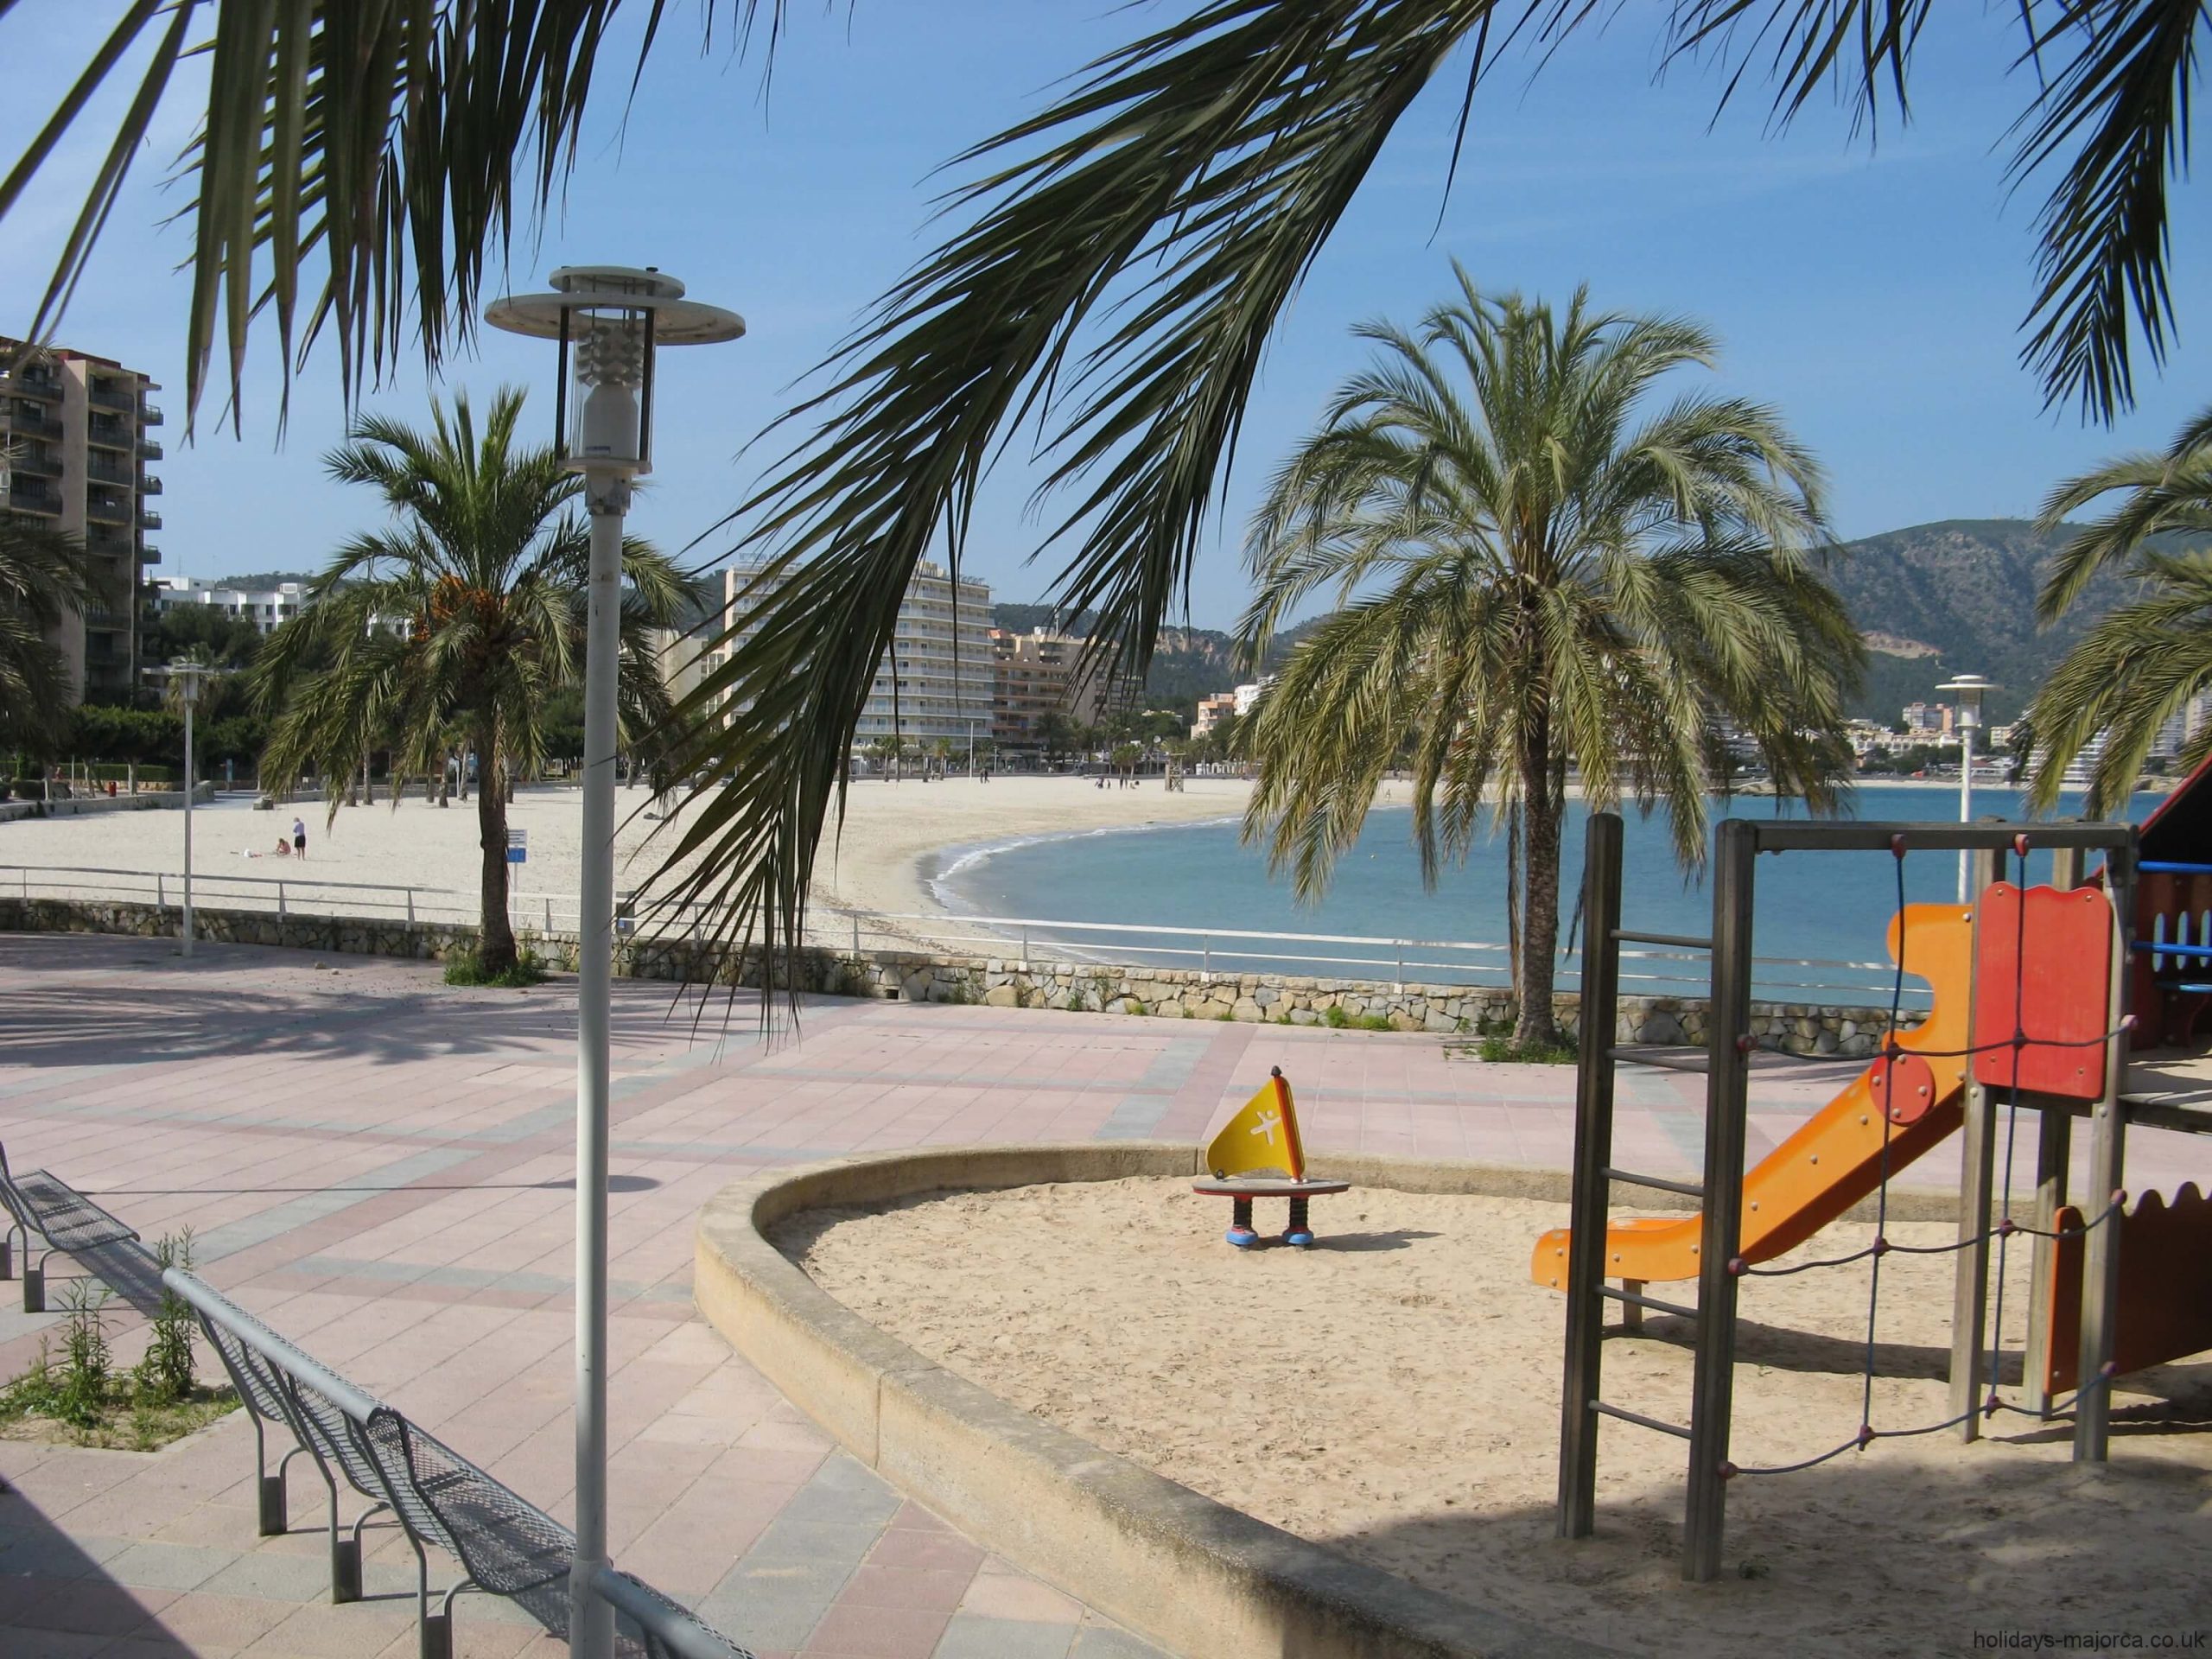 Palma Nova beach and play park